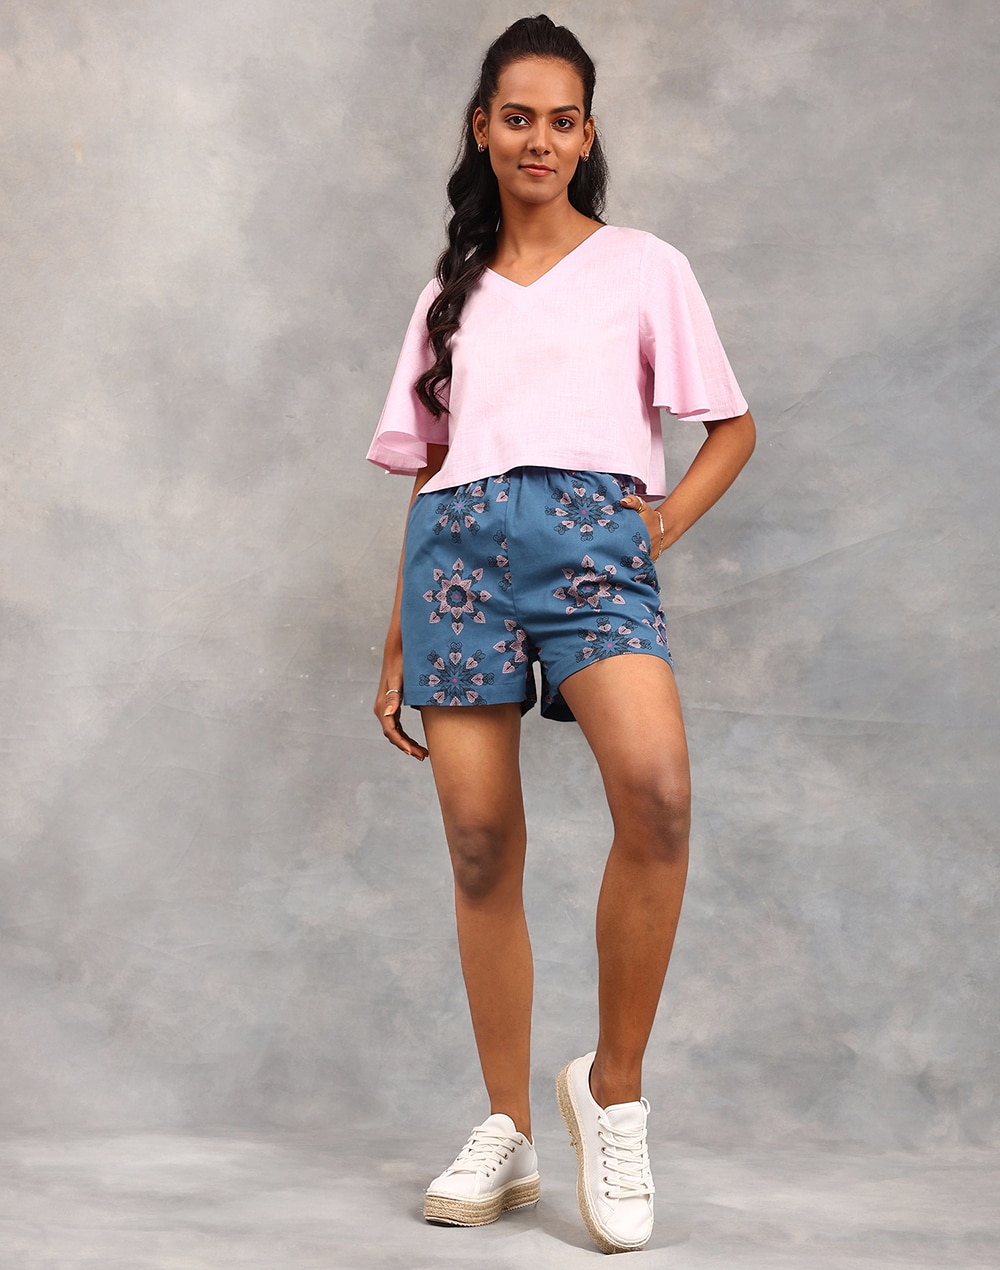 FabNu Teal Cotton Linen Printed Shorts